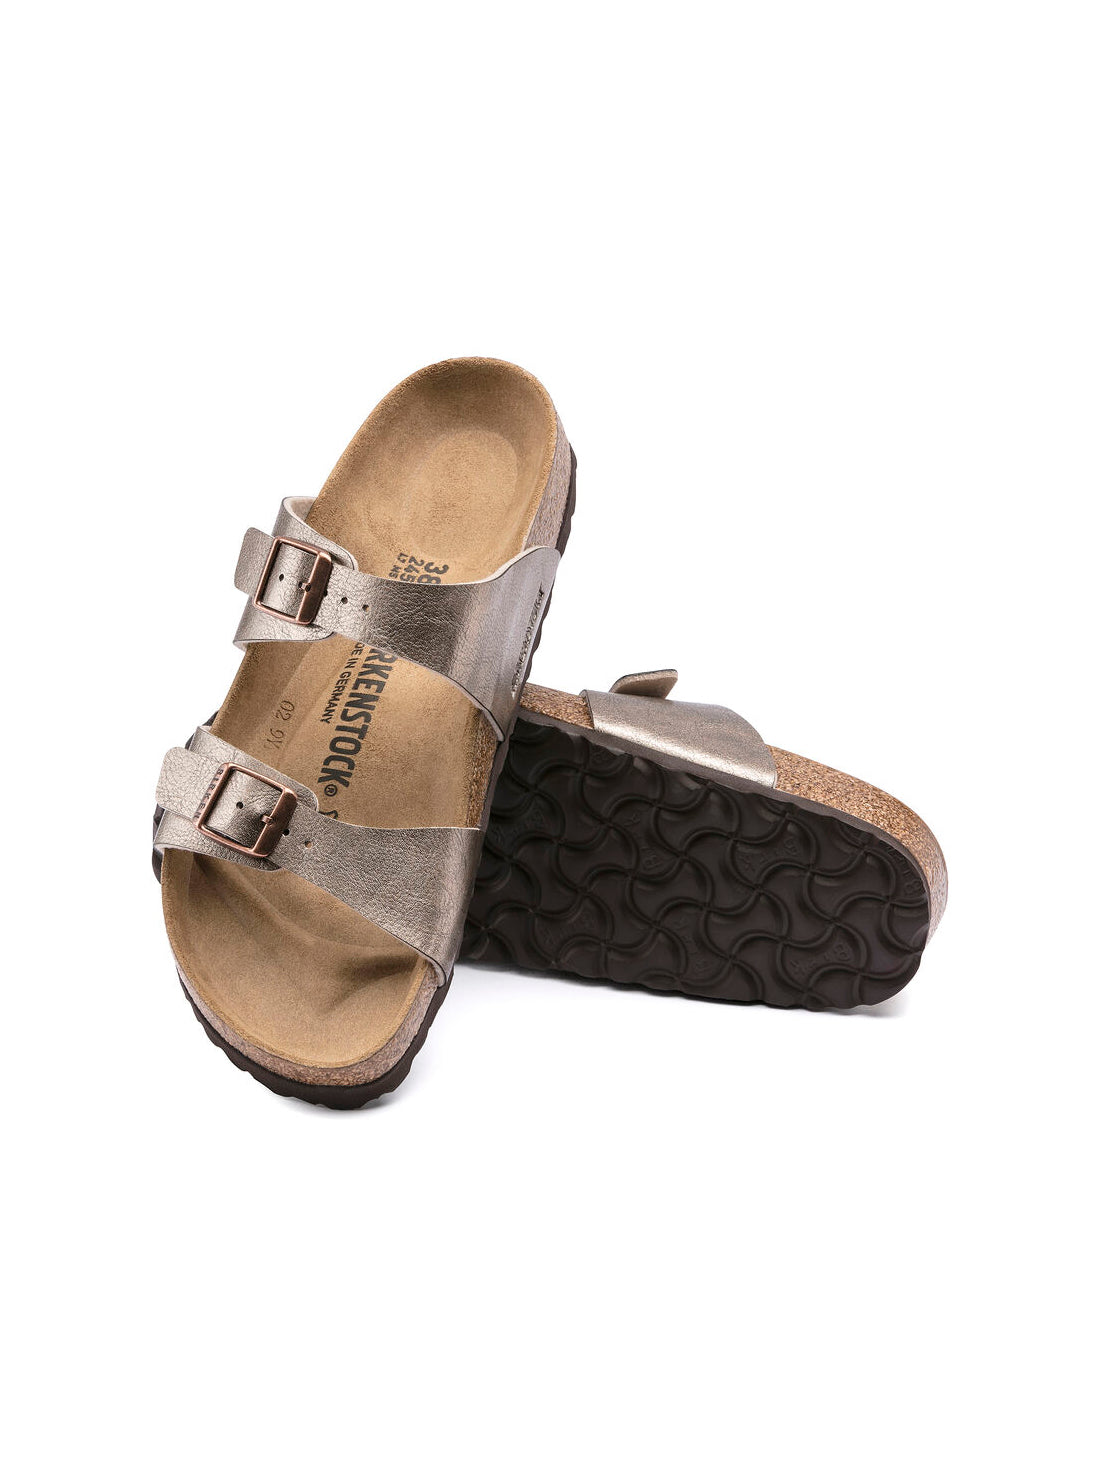 birkenstock sydney sandal in birko-flor graceful taupe narrow